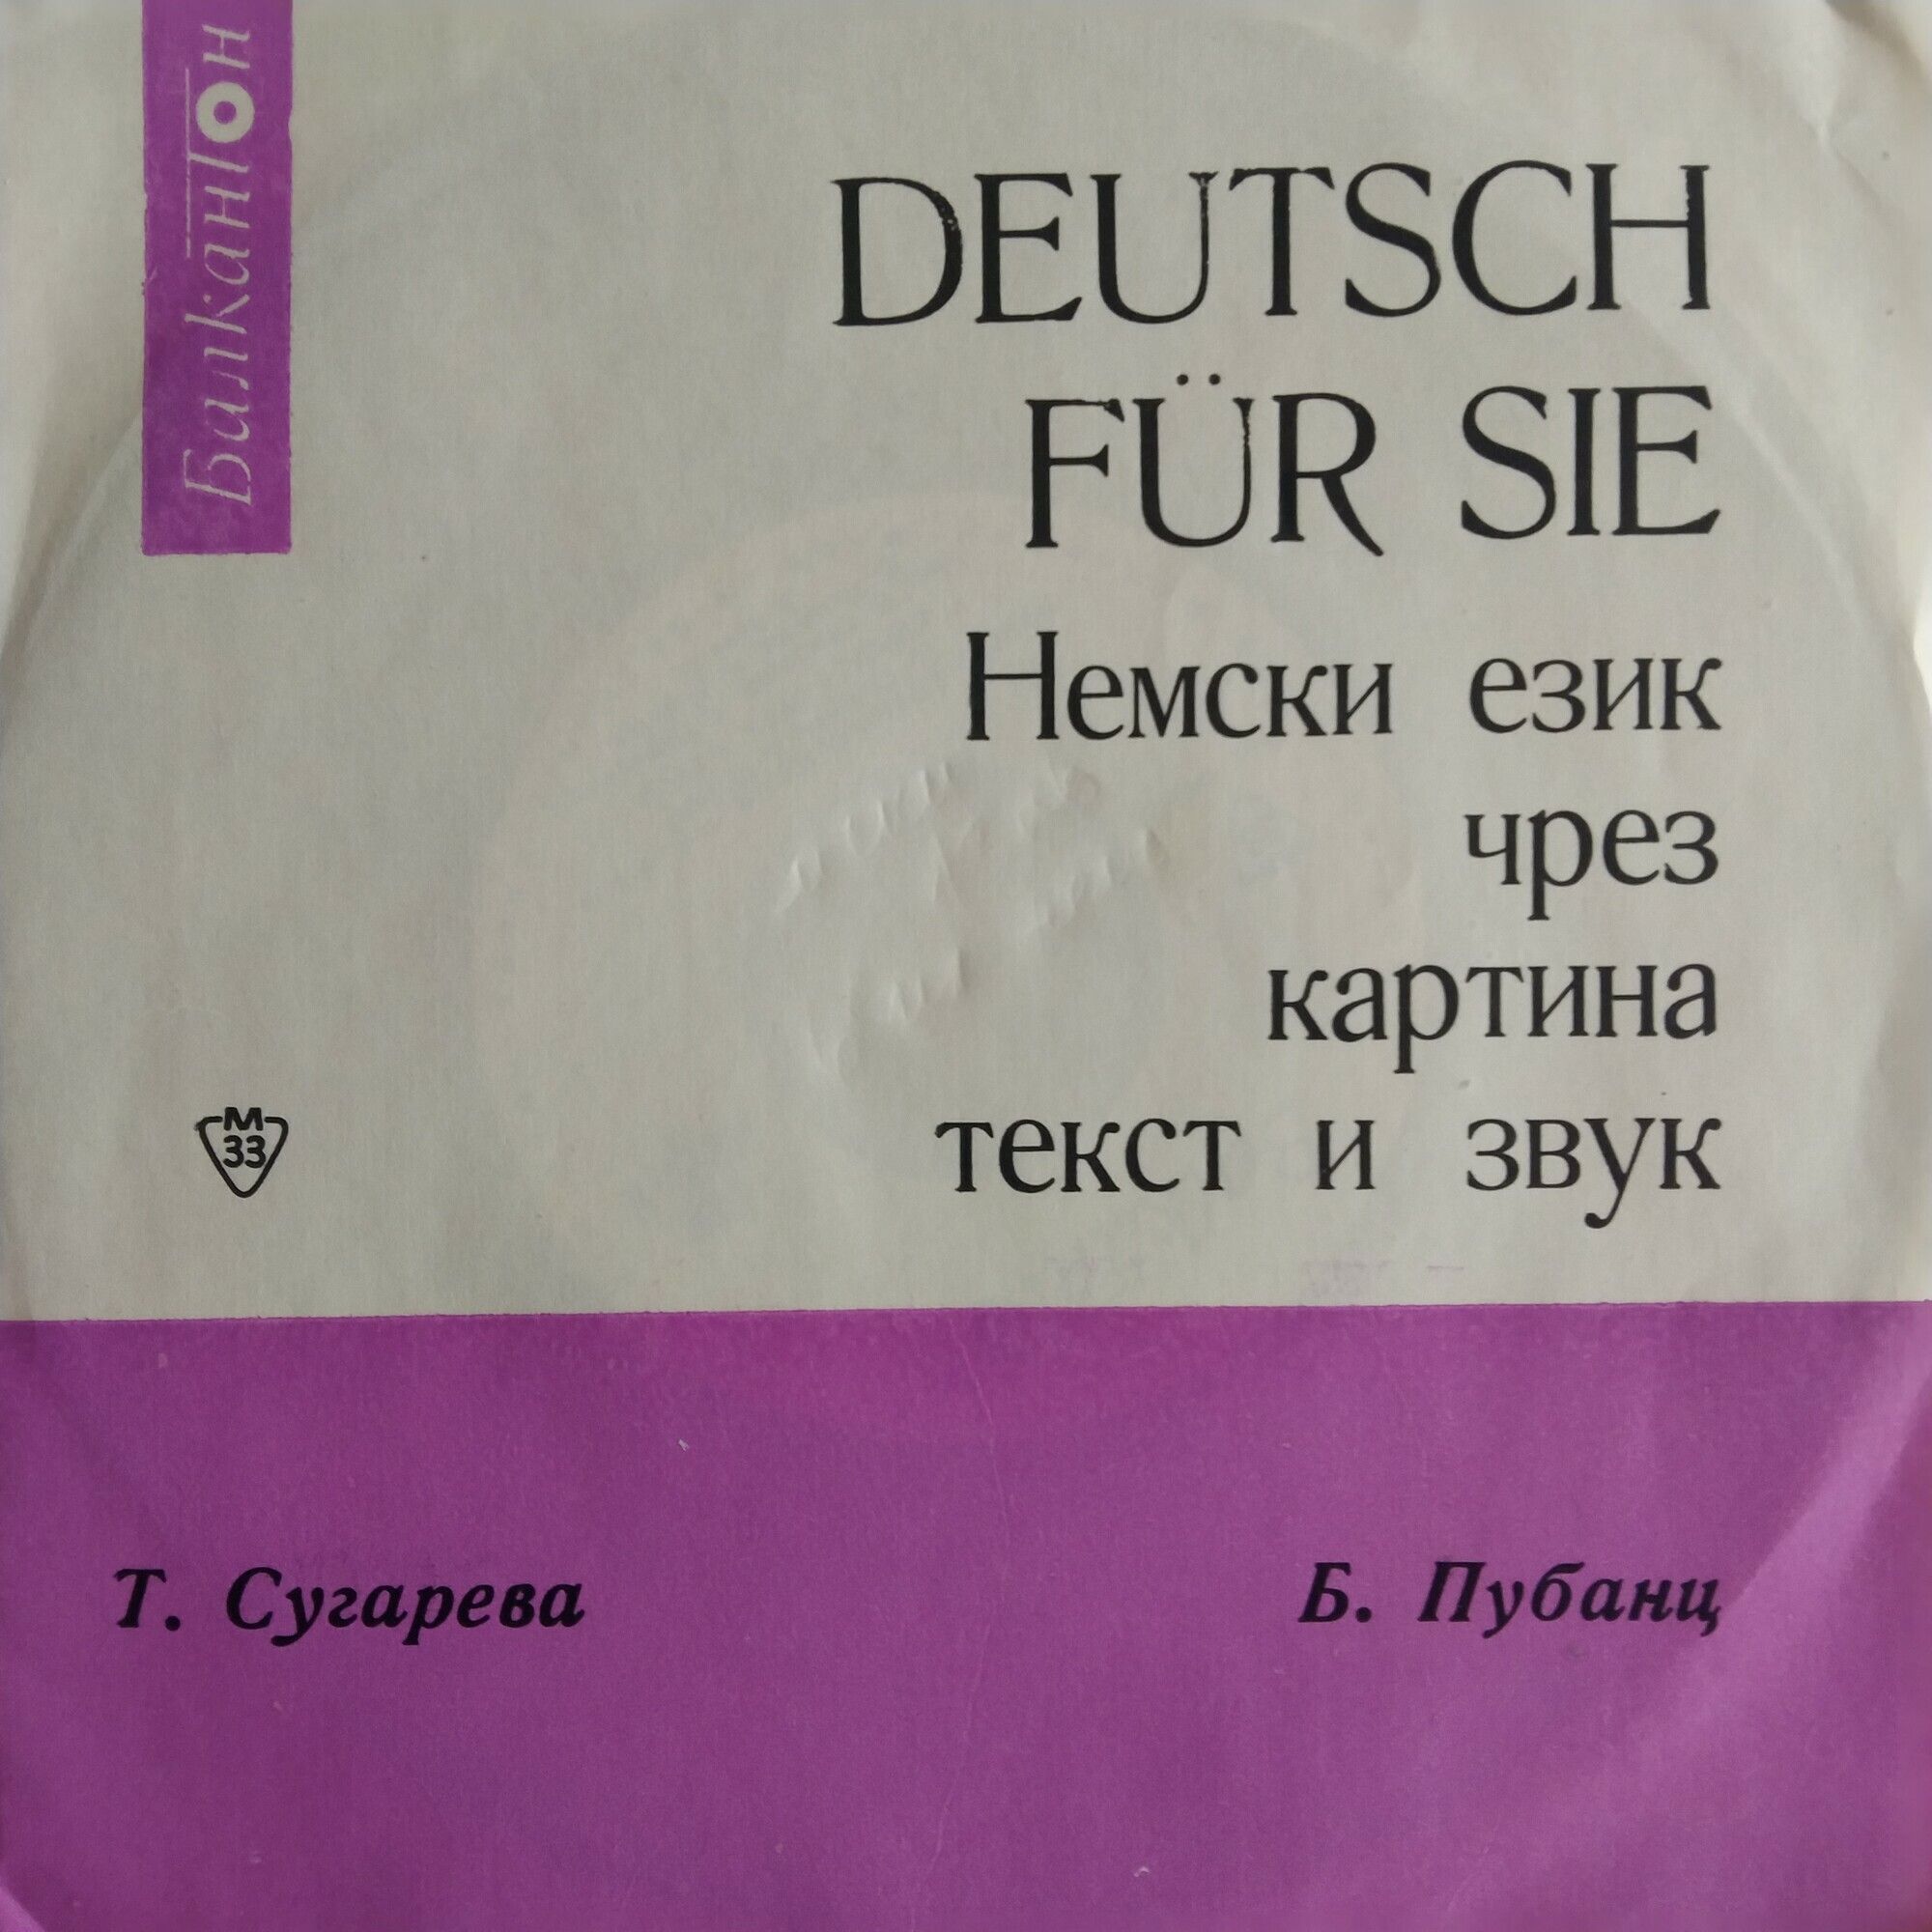 Т. Сугарева, Б. Пубанц. Deutsch fuer Sie. Немски език чрез картина, текст и звук